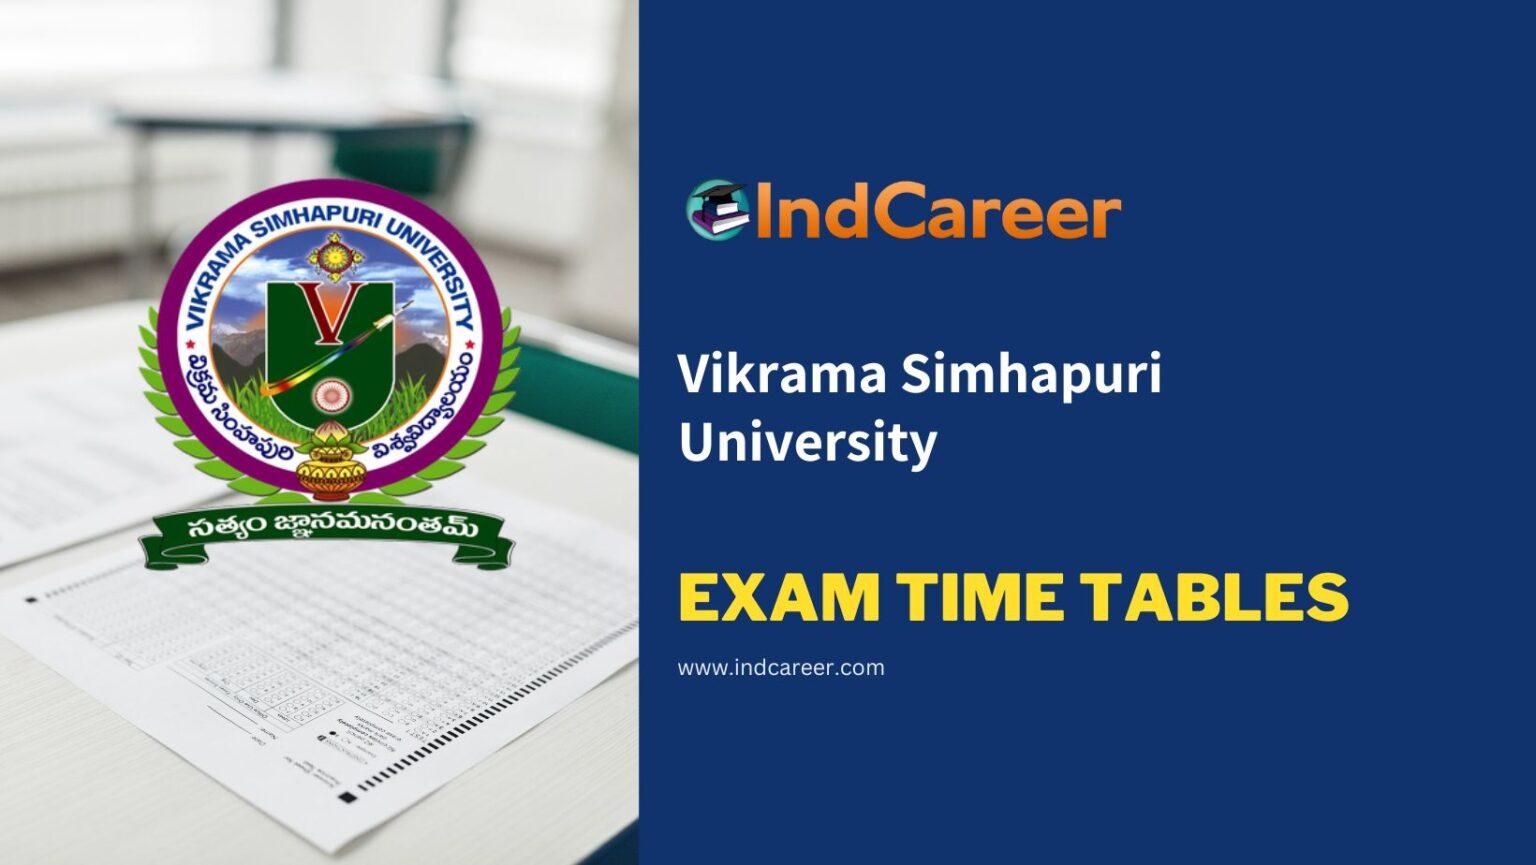 Vikrama Simhapuri University (VSU) Exam Time Tables - IndCareer